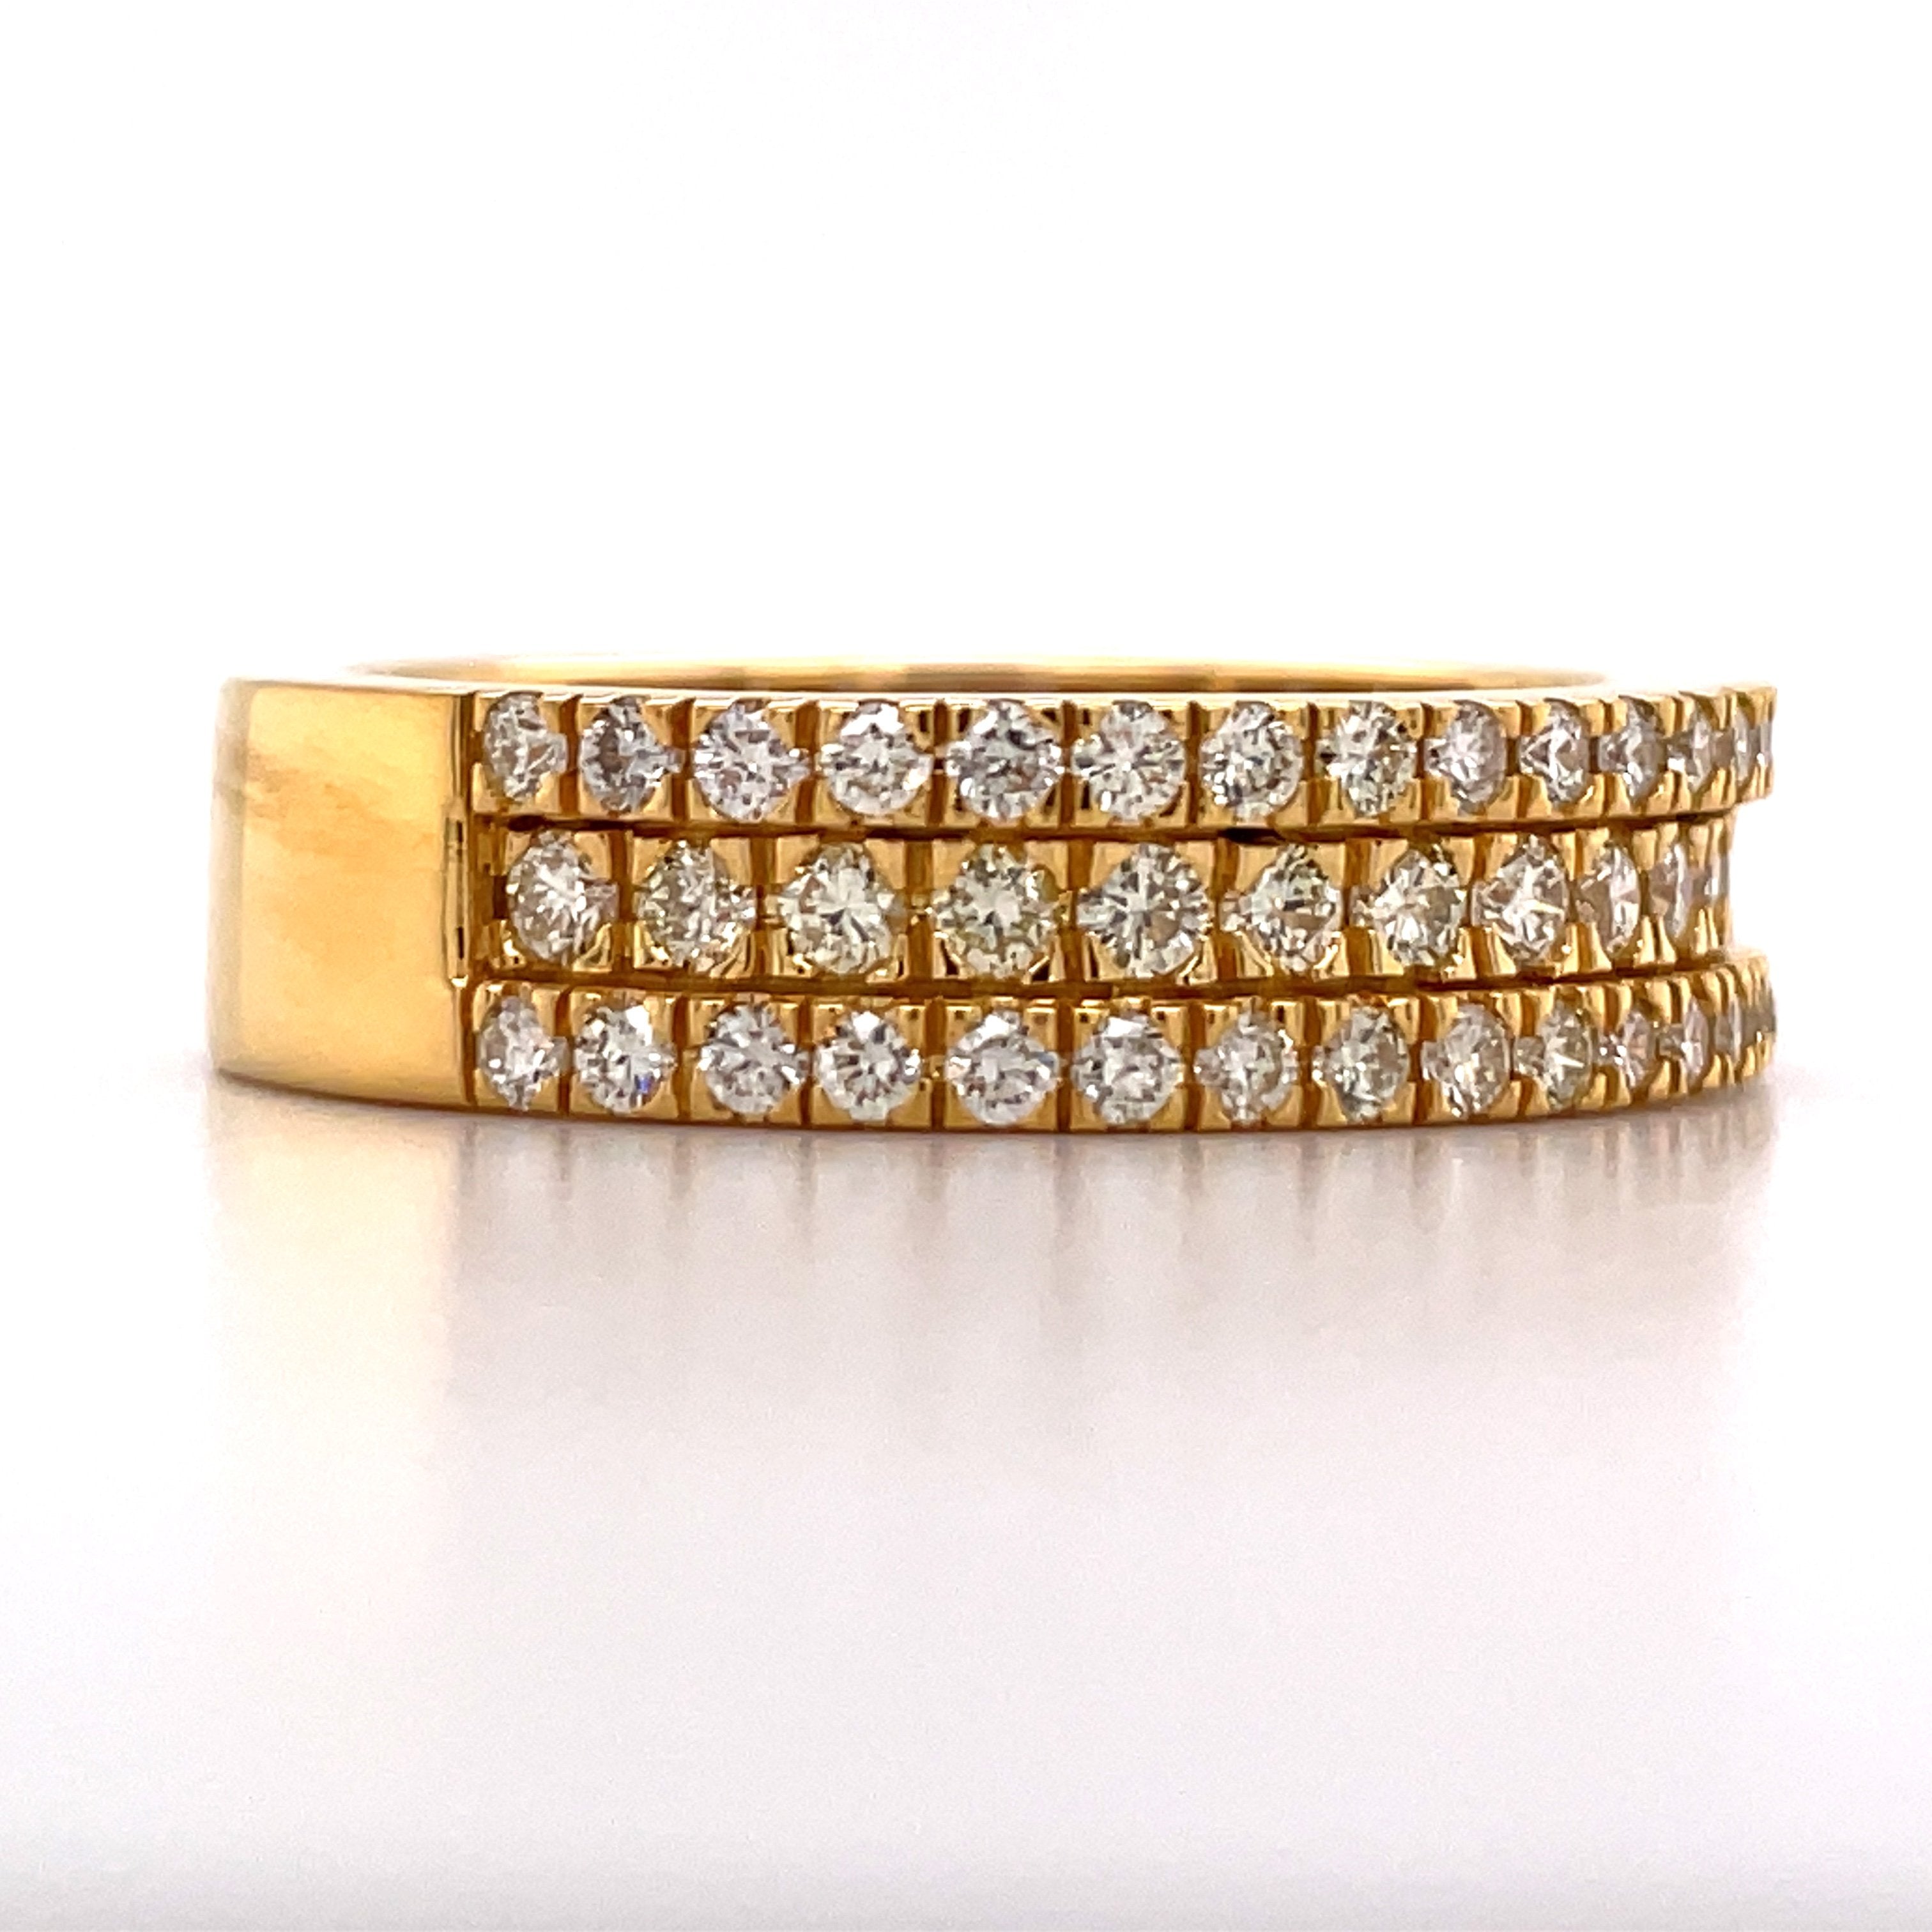 1.74 CT. Diamond Ring in 10K Gold - White Carat - USA & Canada